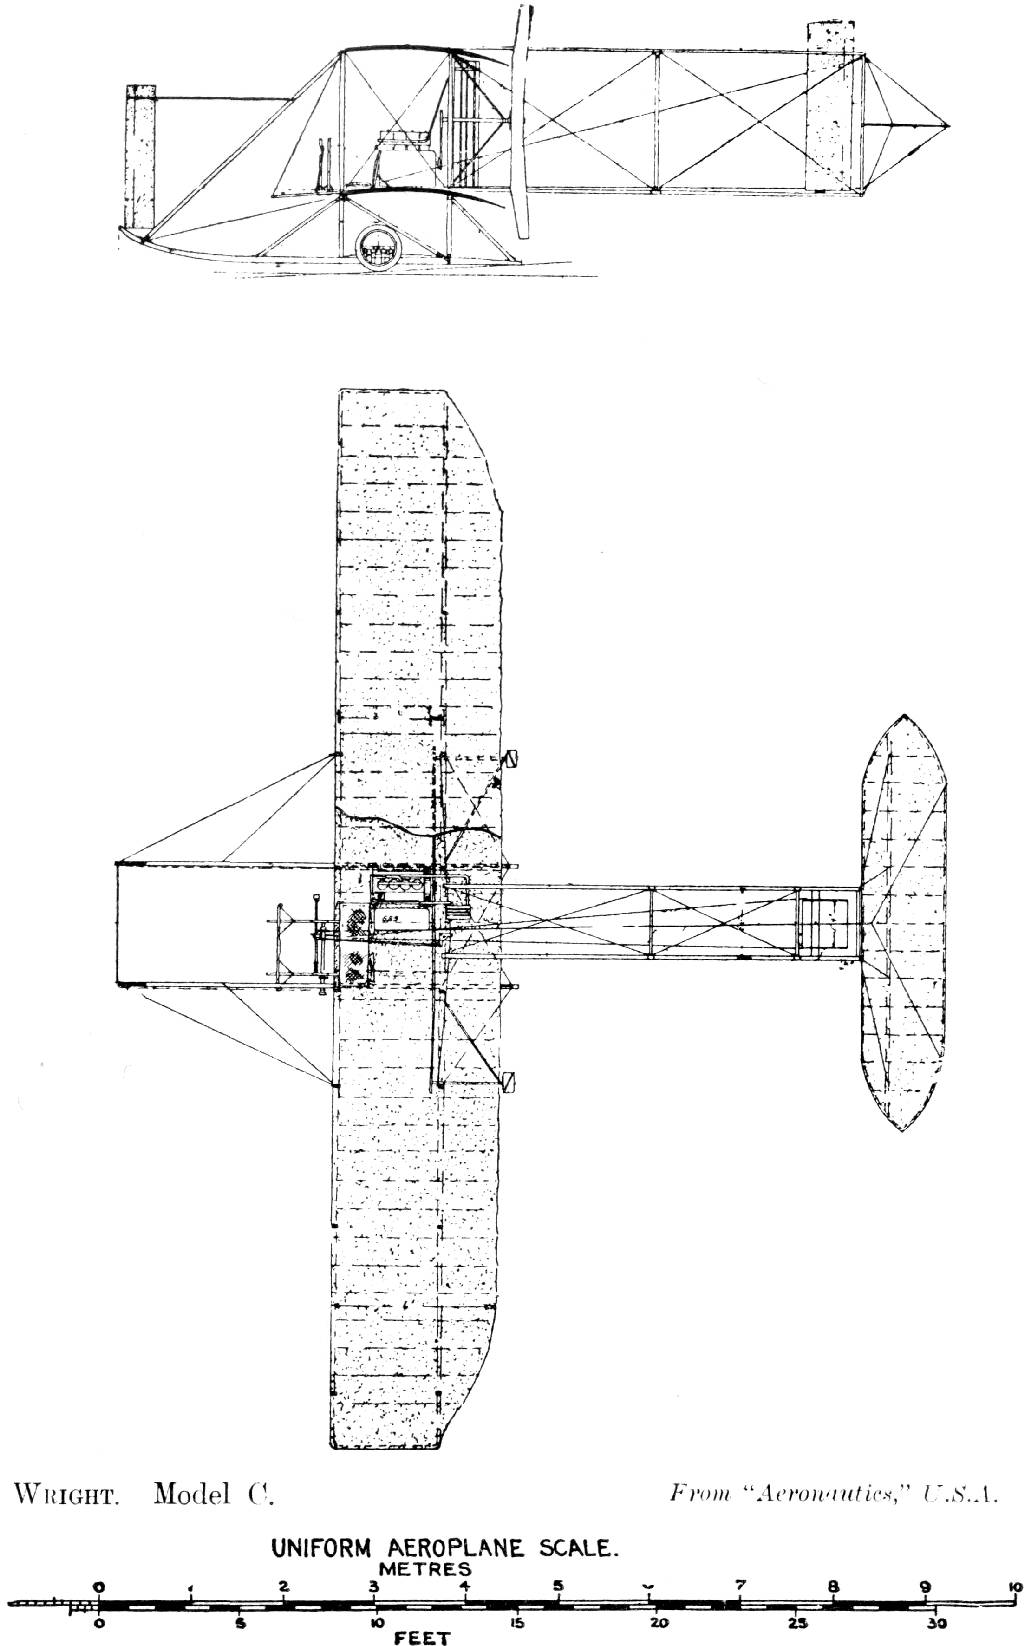 Wright. Model C. From "Aeronautics," U.S.A. Uniform Aeroplane Scale